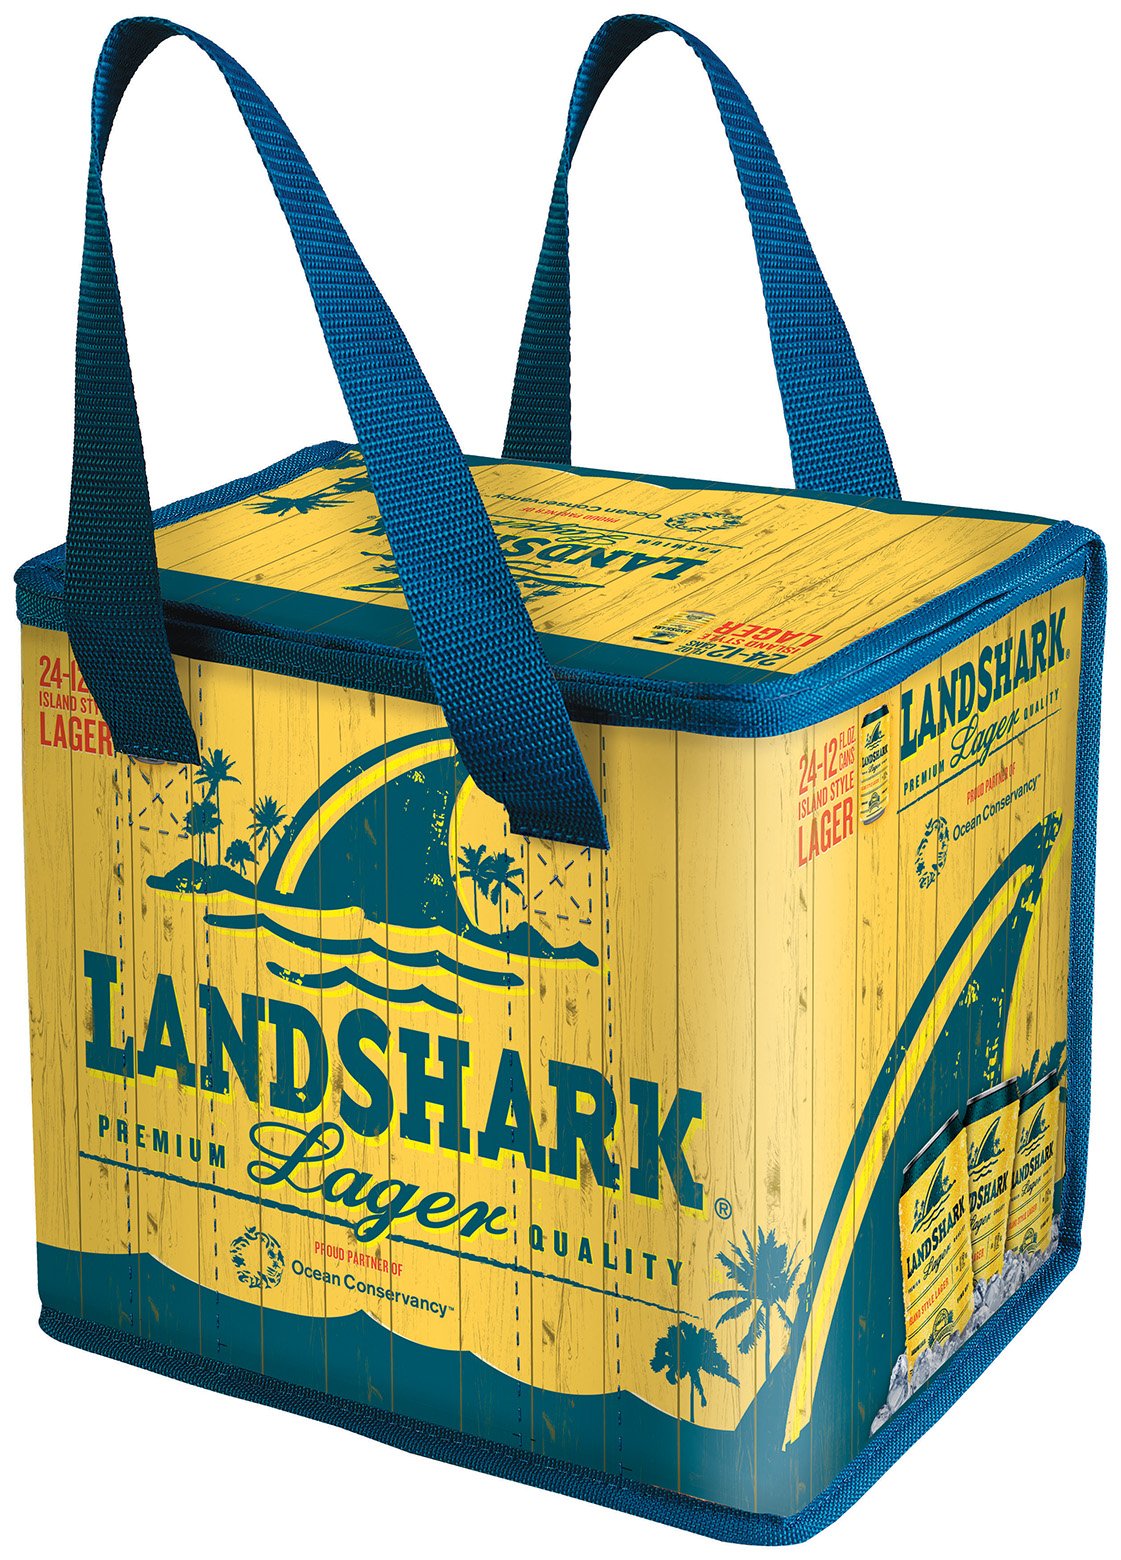 Landshark Premium Lager Beer 24 Pack 